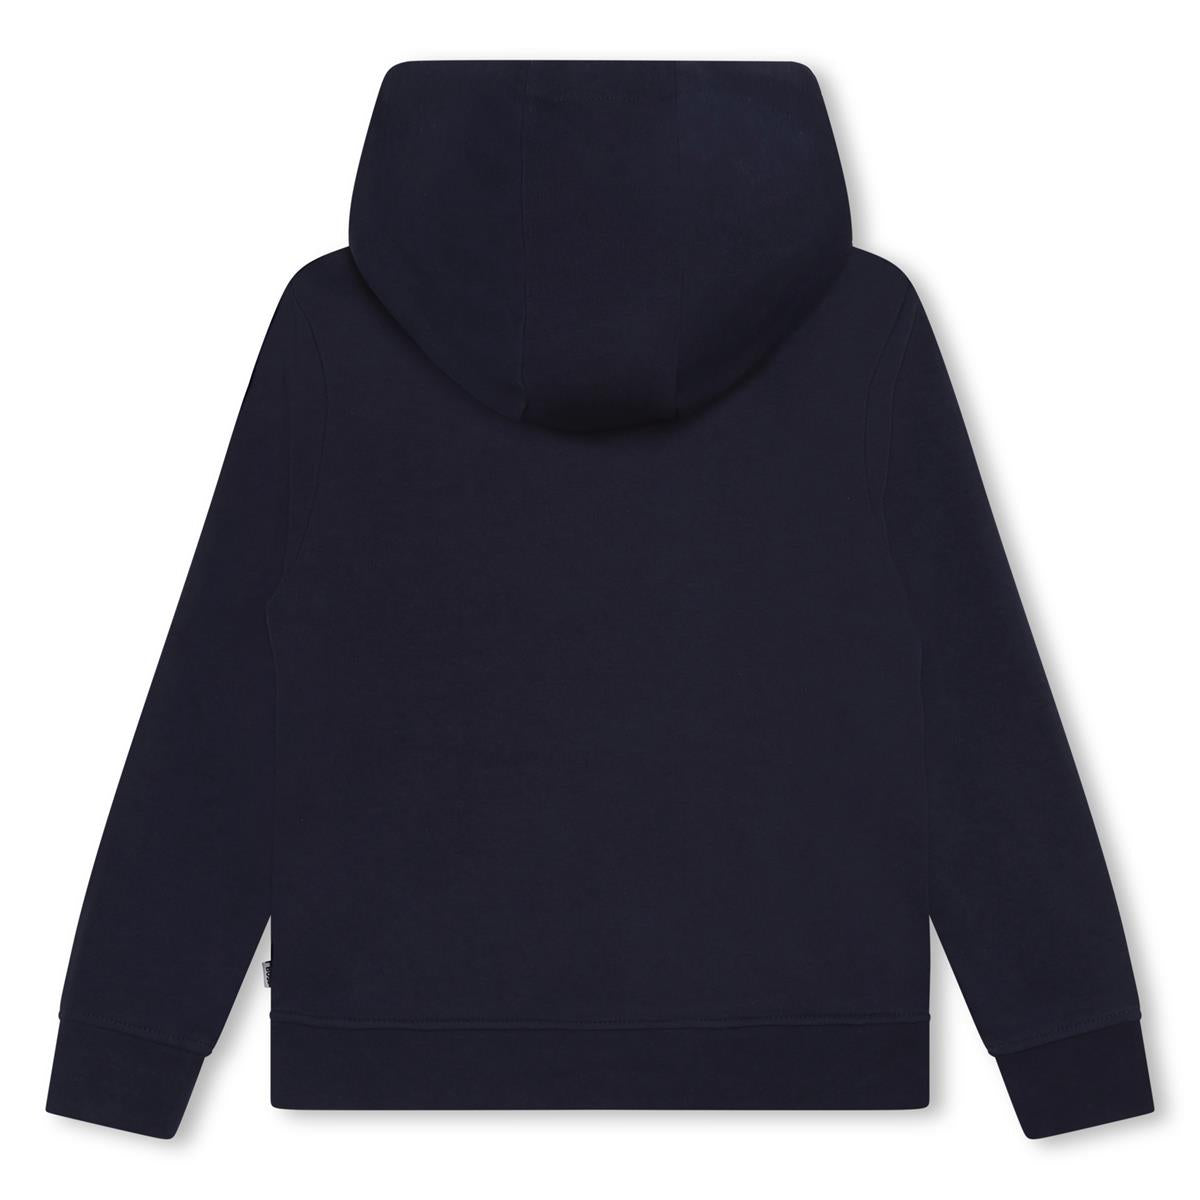 Boys & Girls Blue Hooded Sweatshirt